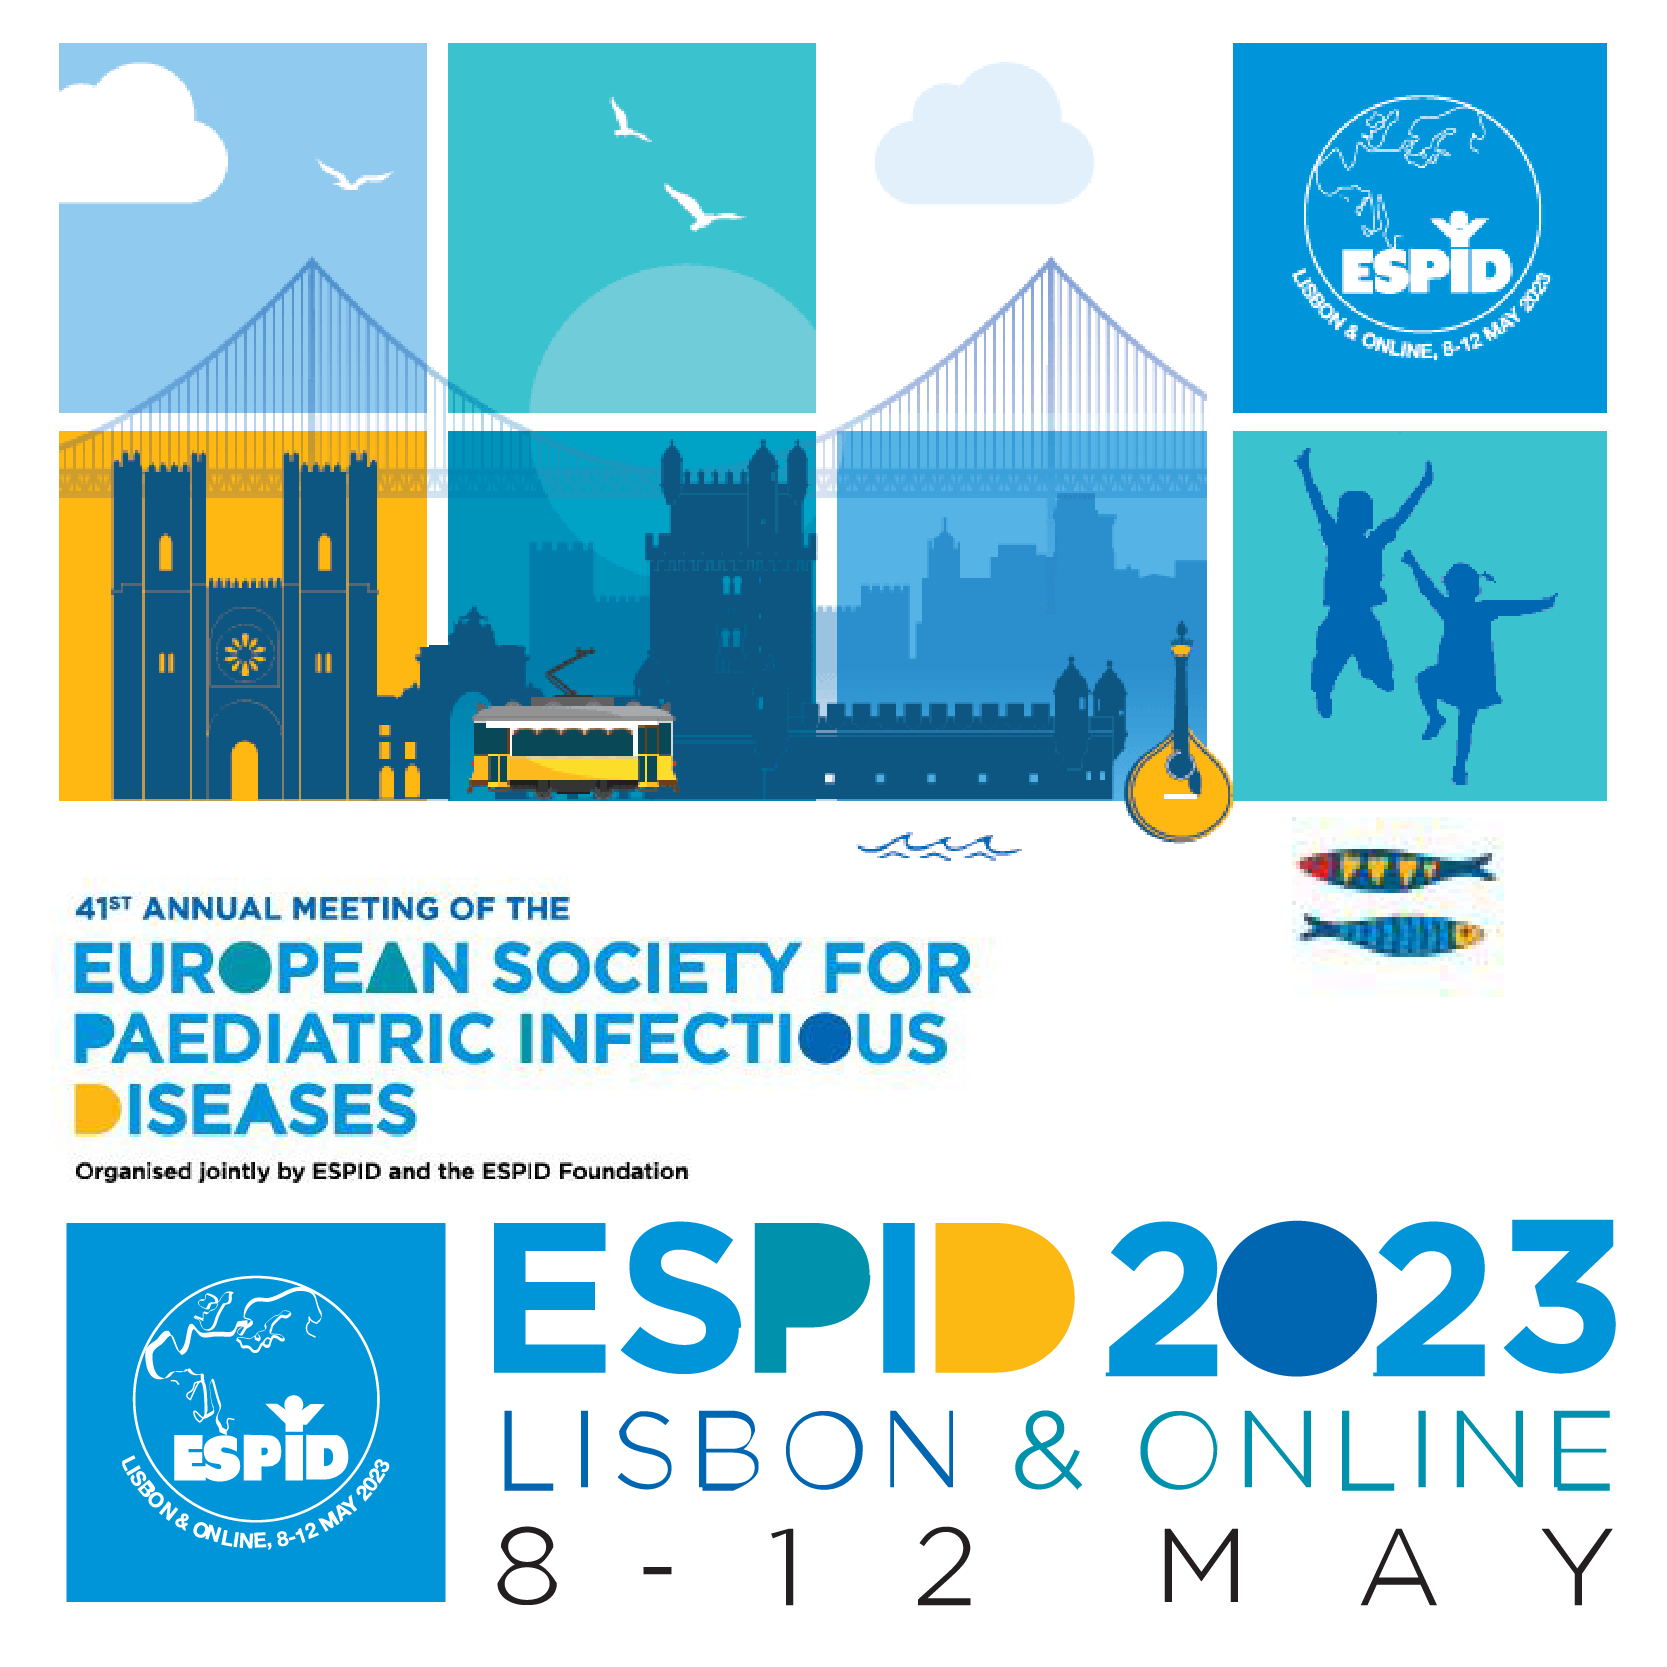 European Society for Paediatric Infectious Diseases Annual Meeting - ESPID 2023